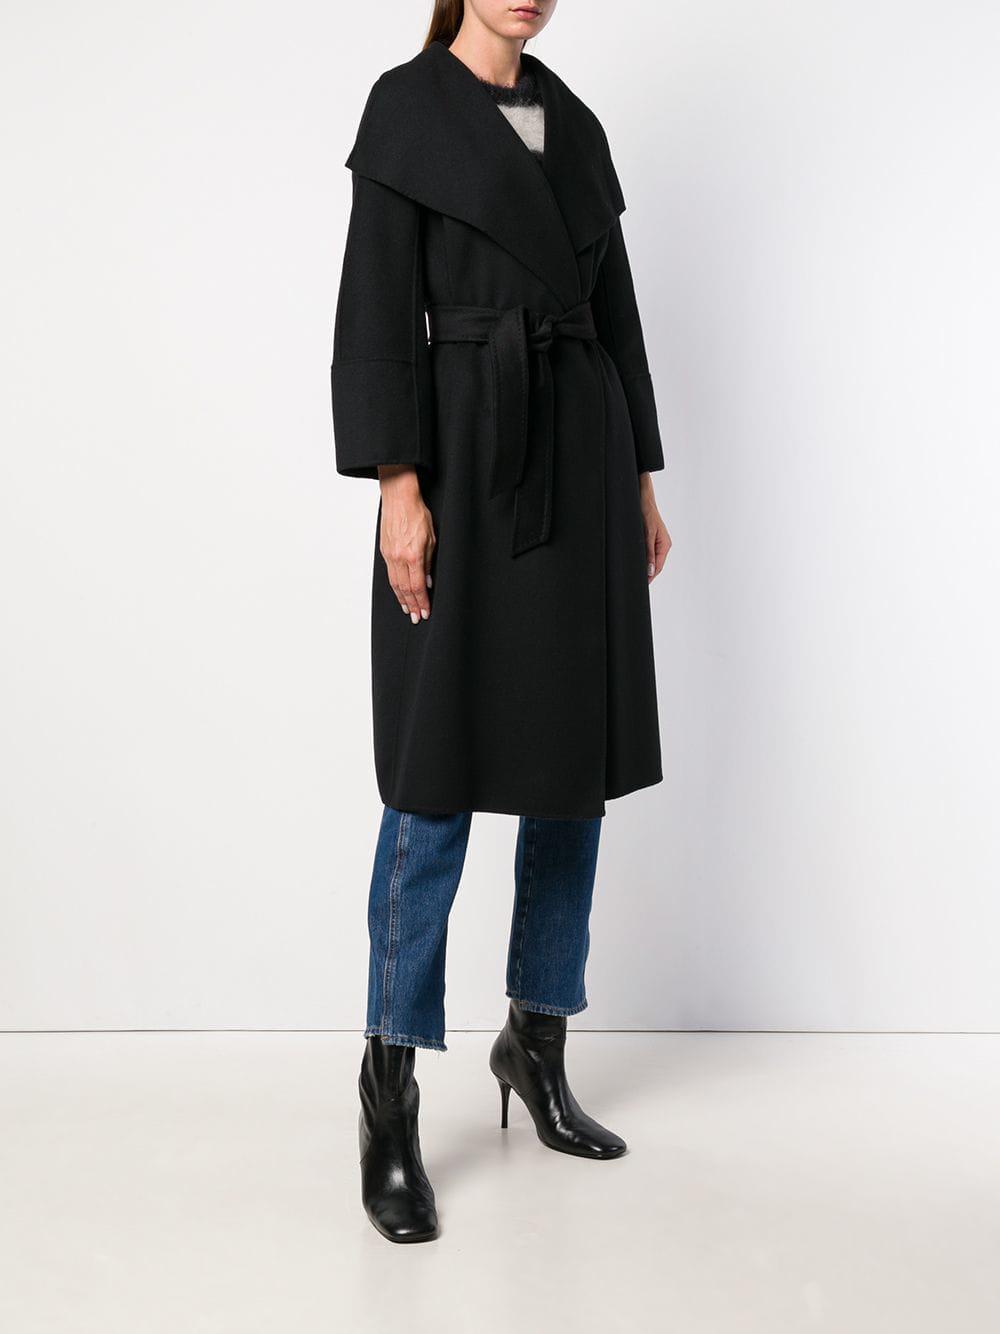 Max Mara Studio Wool Bosso Coat in Black - Lyst